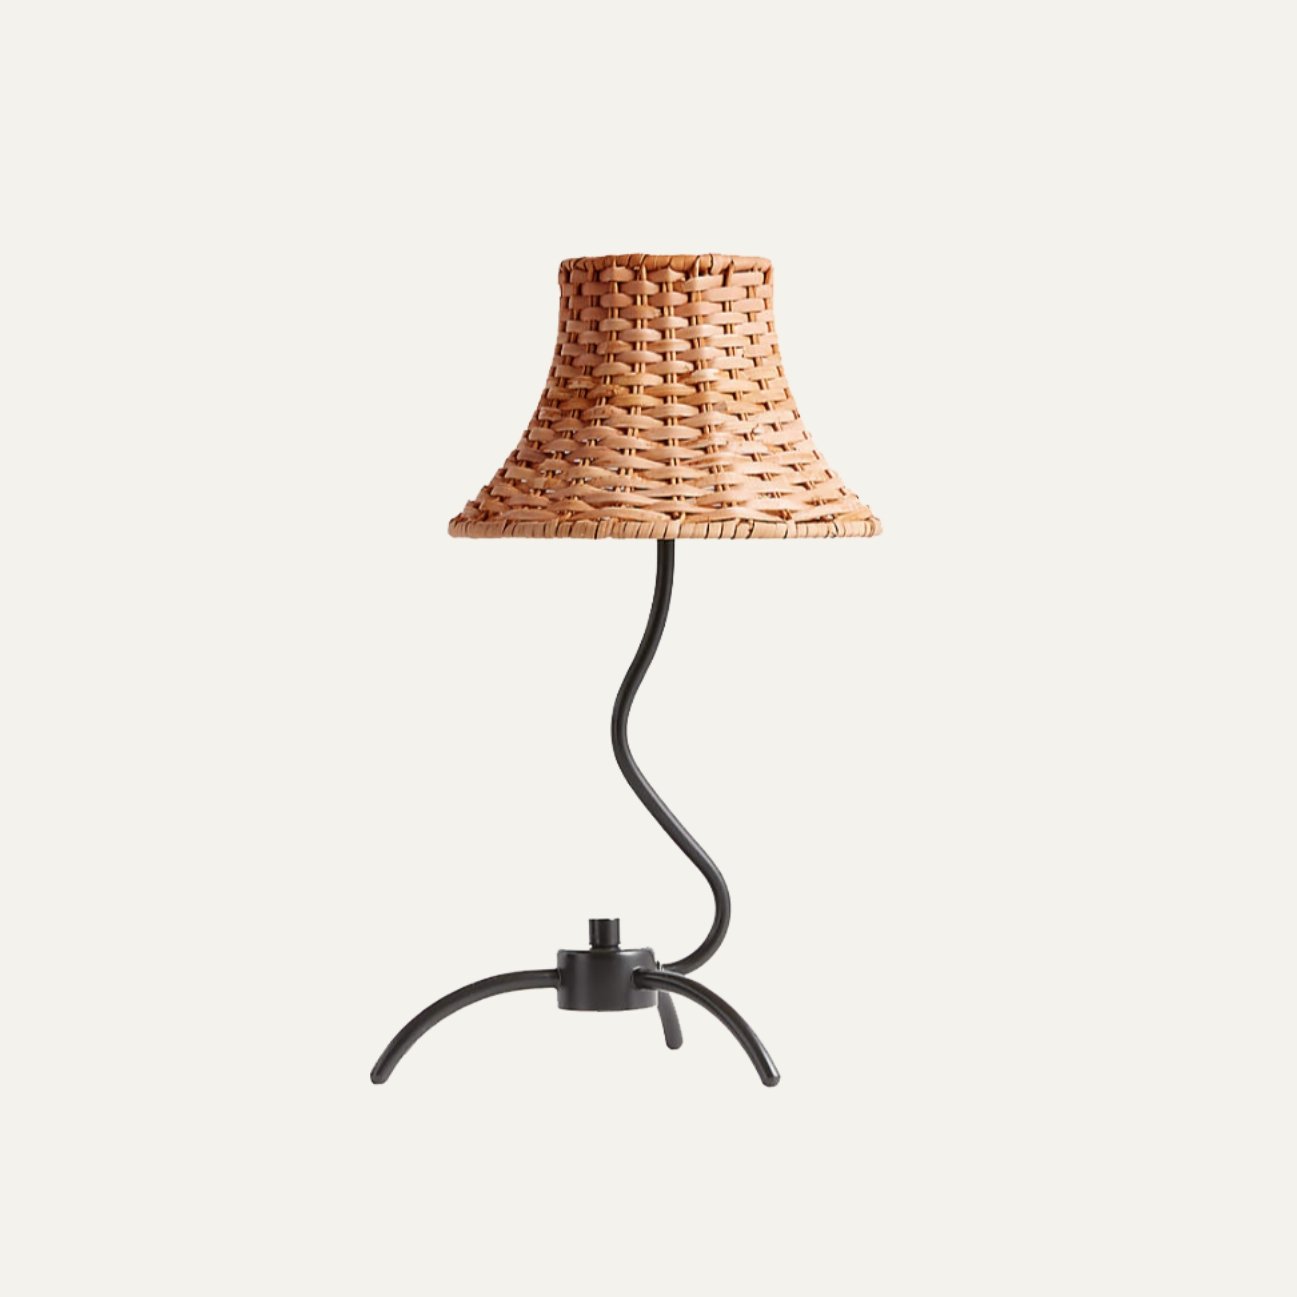 Wavy Lamp by Athena Calderone